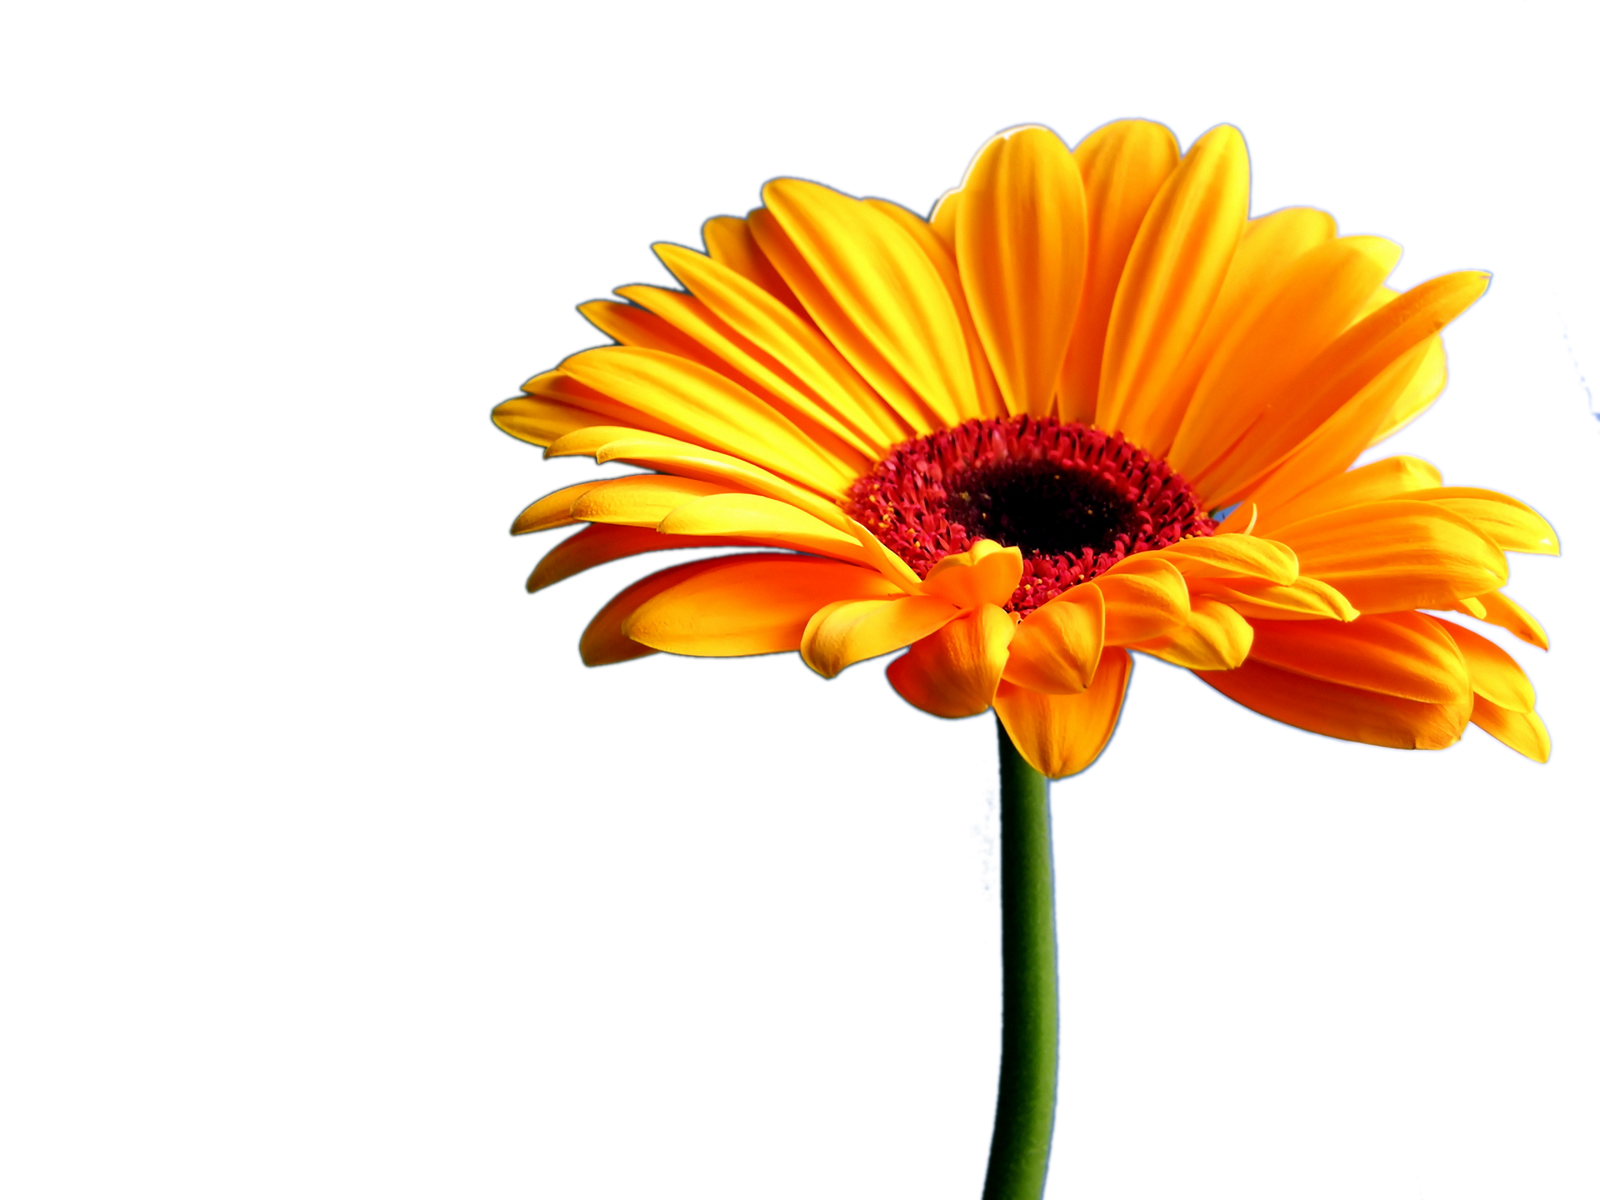 orange gerbera daisy